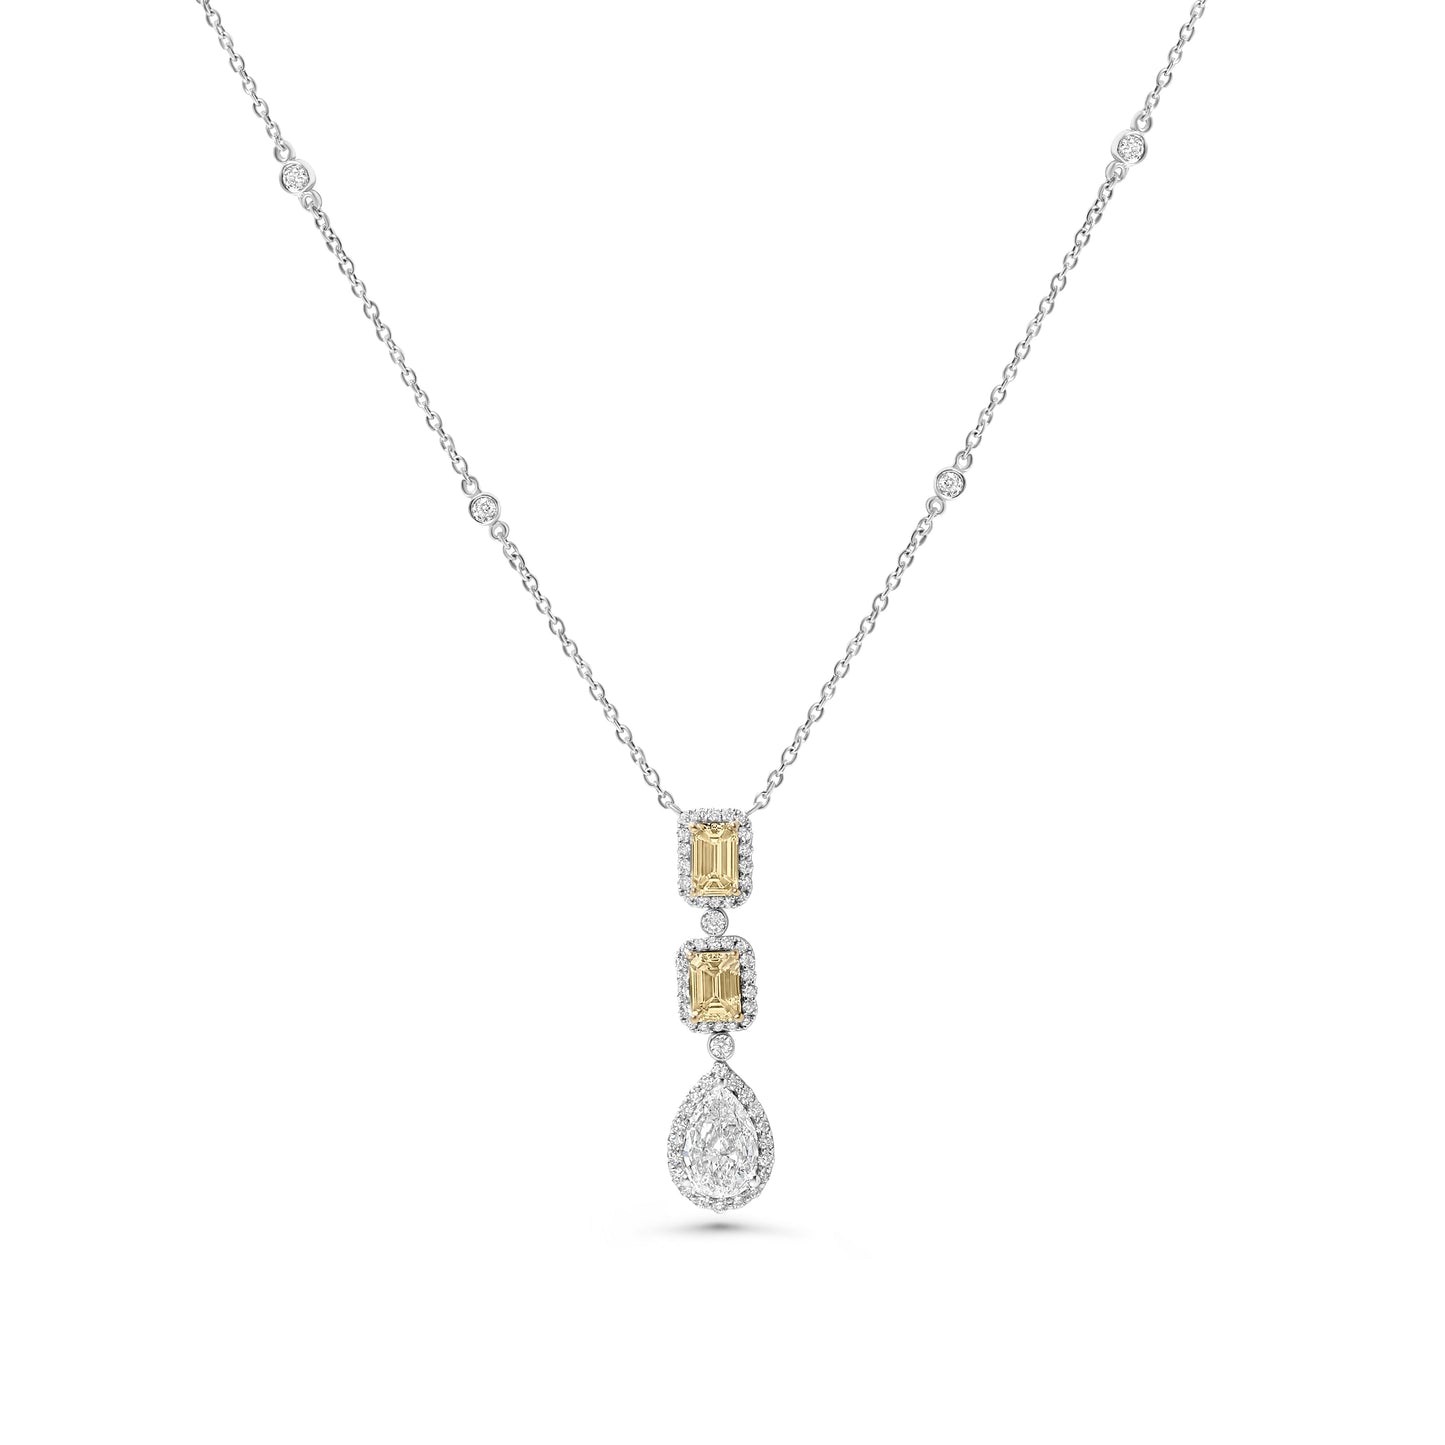 Certified Solitaire Diamond & Yellow Diamond Pendant Necklace